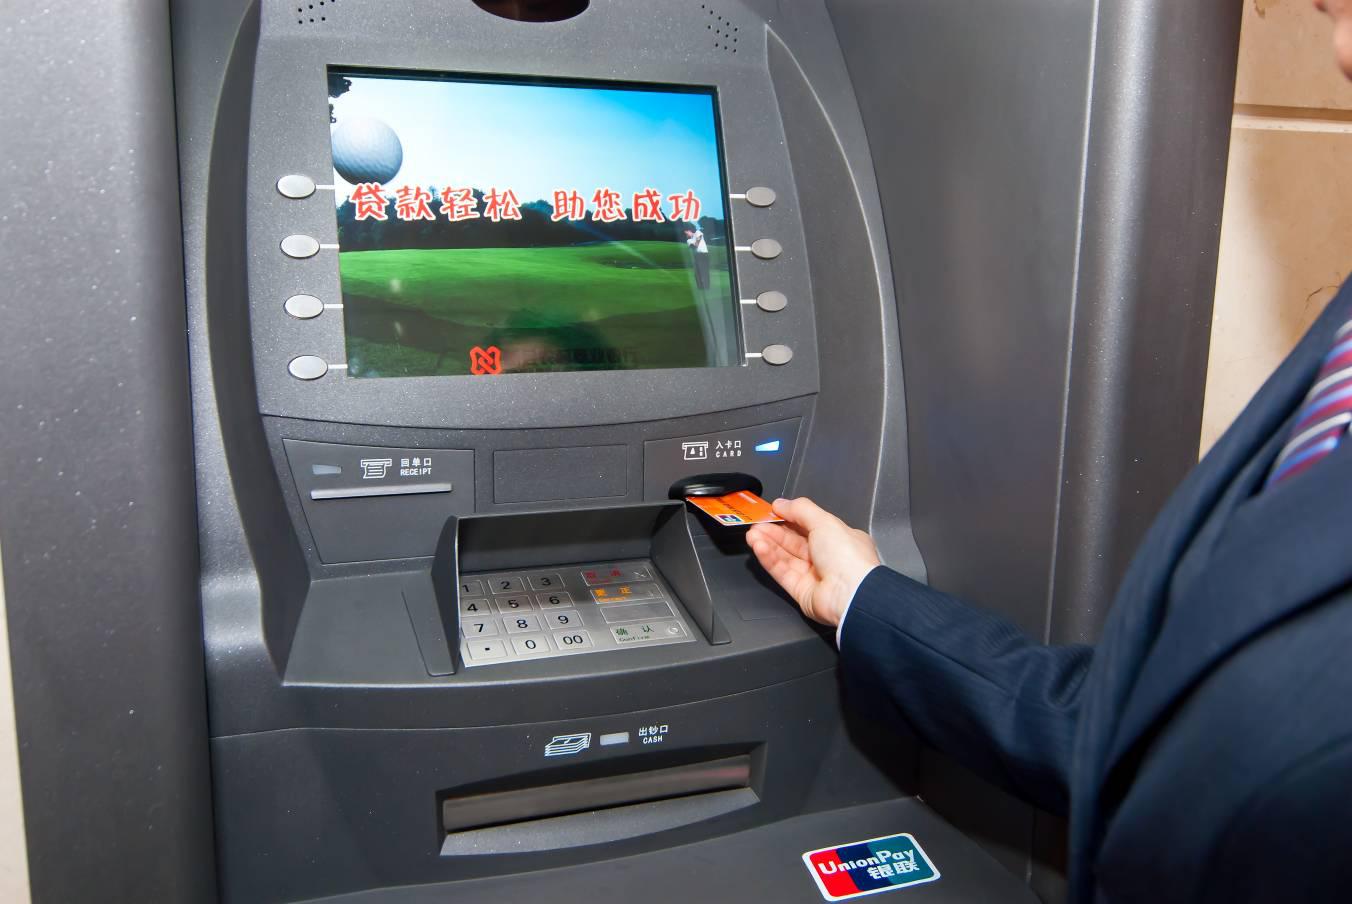 ATM自动取款机图片素材-编号10265353-图行天下